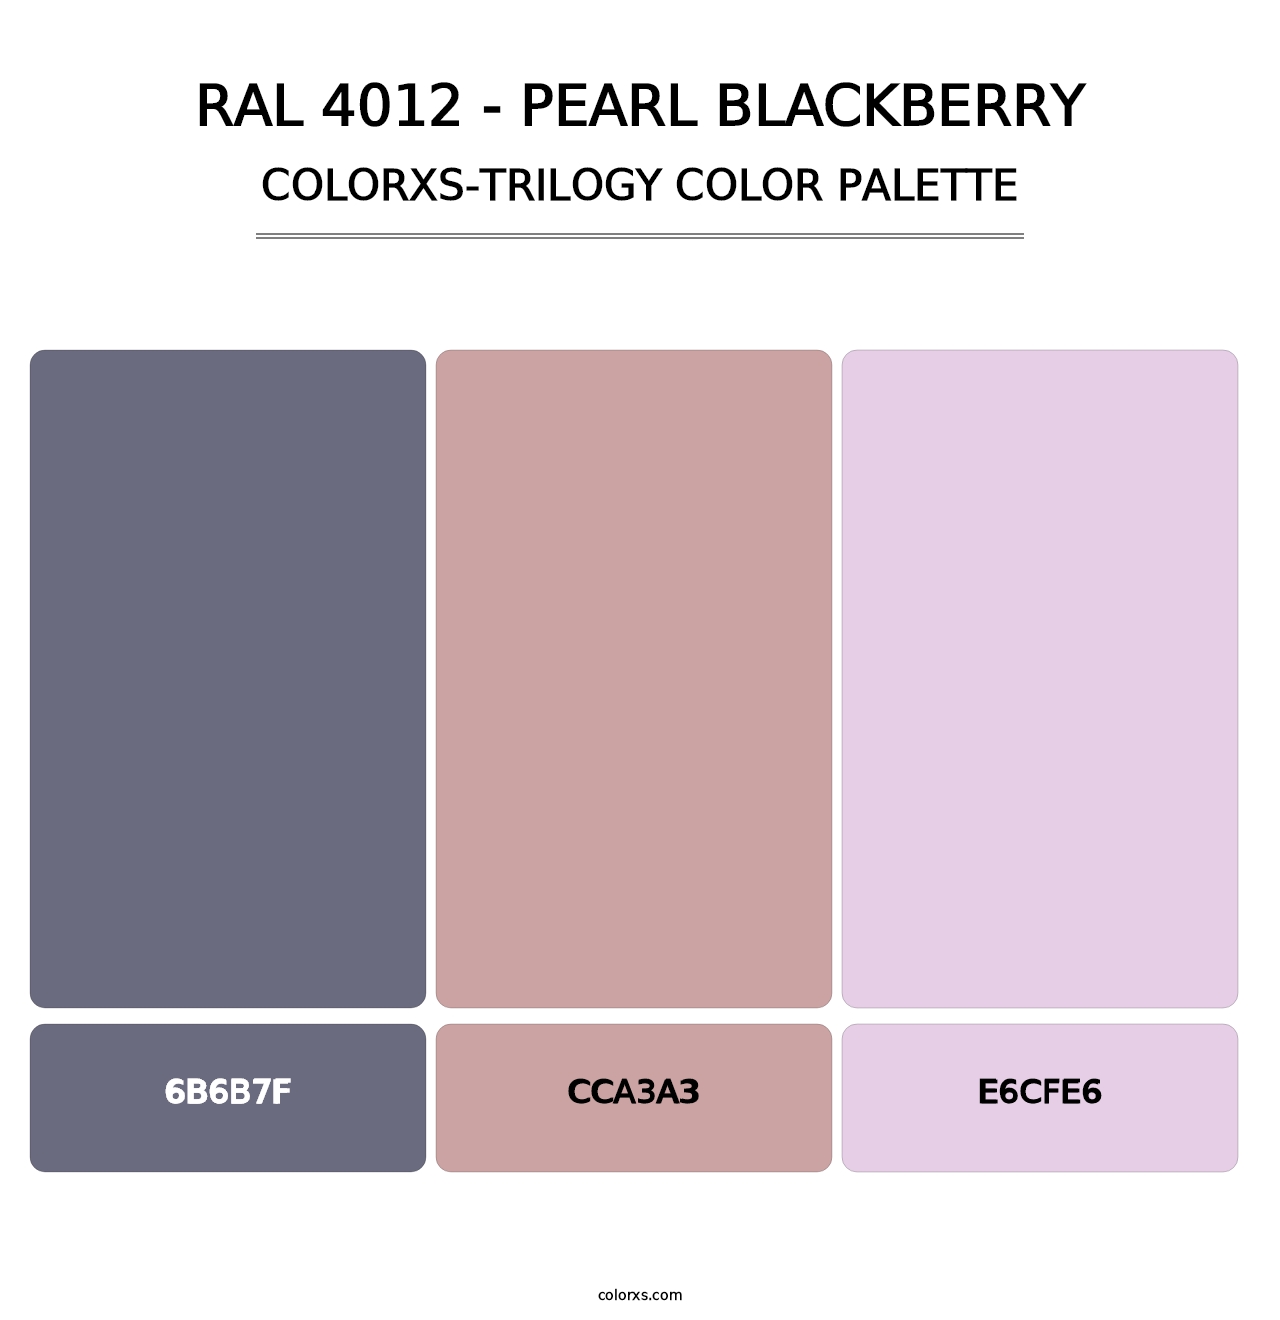 RAL 4012 - Pearl Blackberry - Colorxs Trilogy Palette